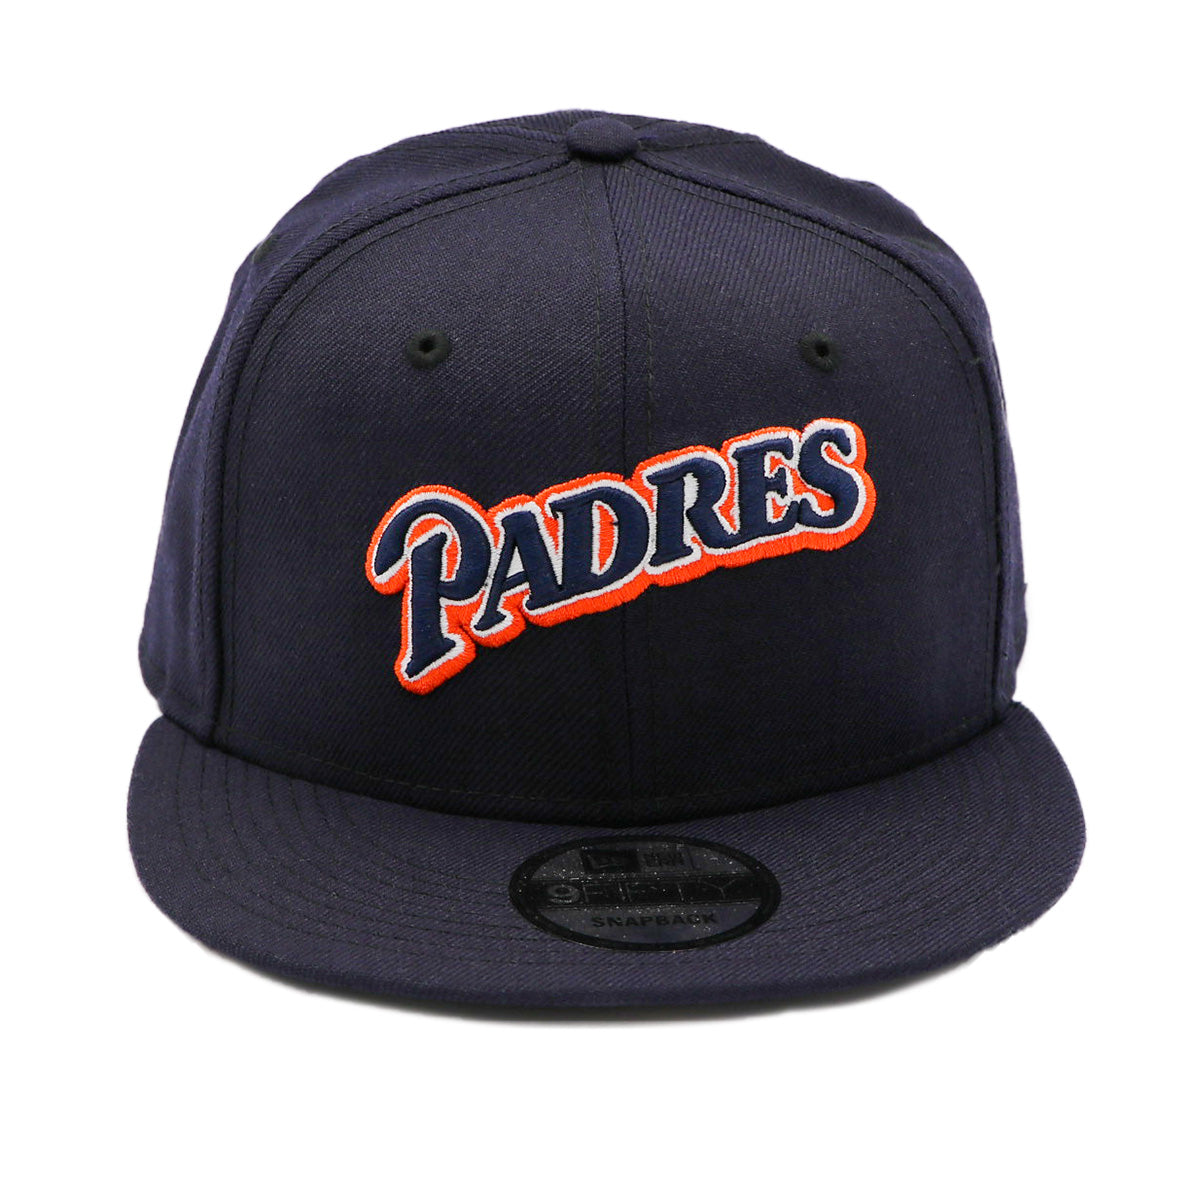 New Era 9FIFTY San Diego Padres P Logo Snapback Hat Black White